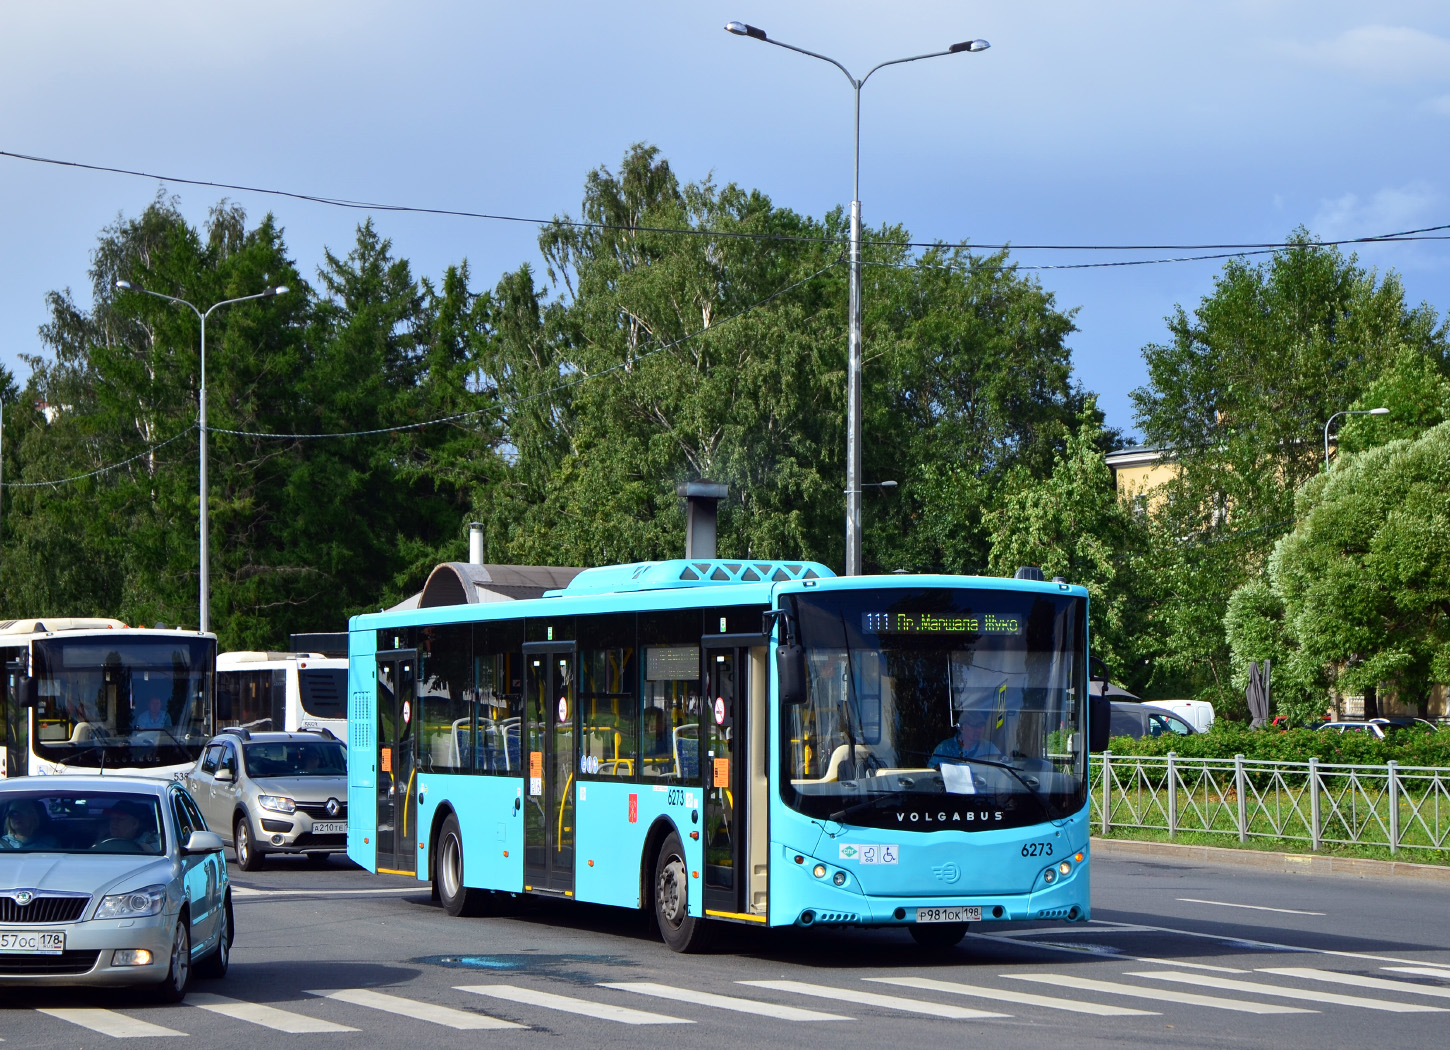 Санкт-Петербург, Volgabus-5270.G4 (LNG) № 6273